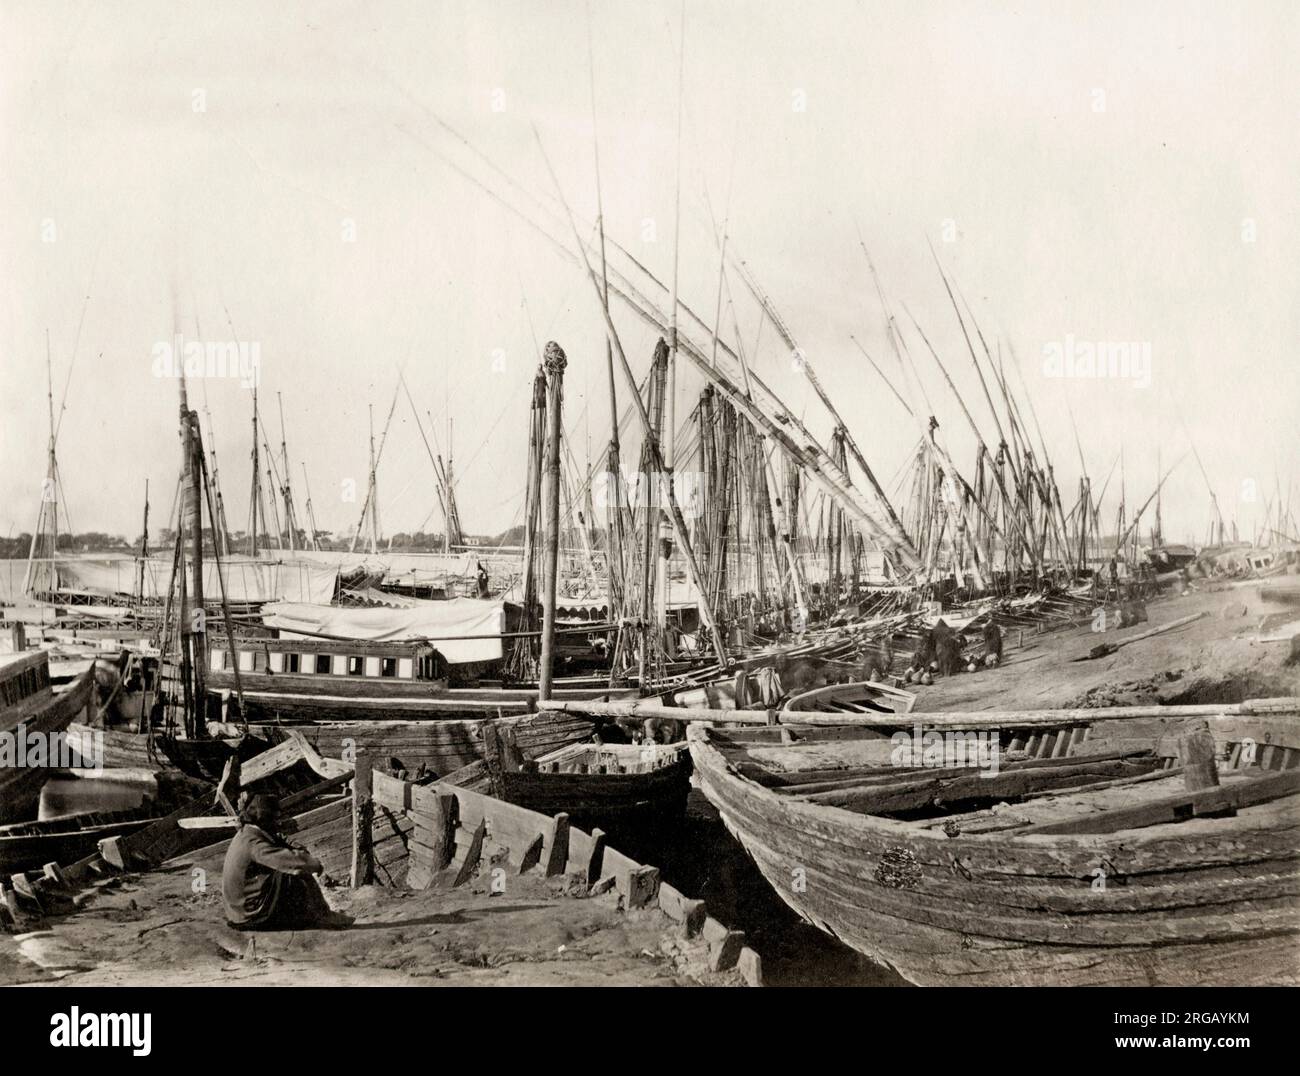 Vintage 19. Jahrhundert Foto - Boote gebunden entlang der Ufer des Nils, Ägypten, um 1870. Stockfoto